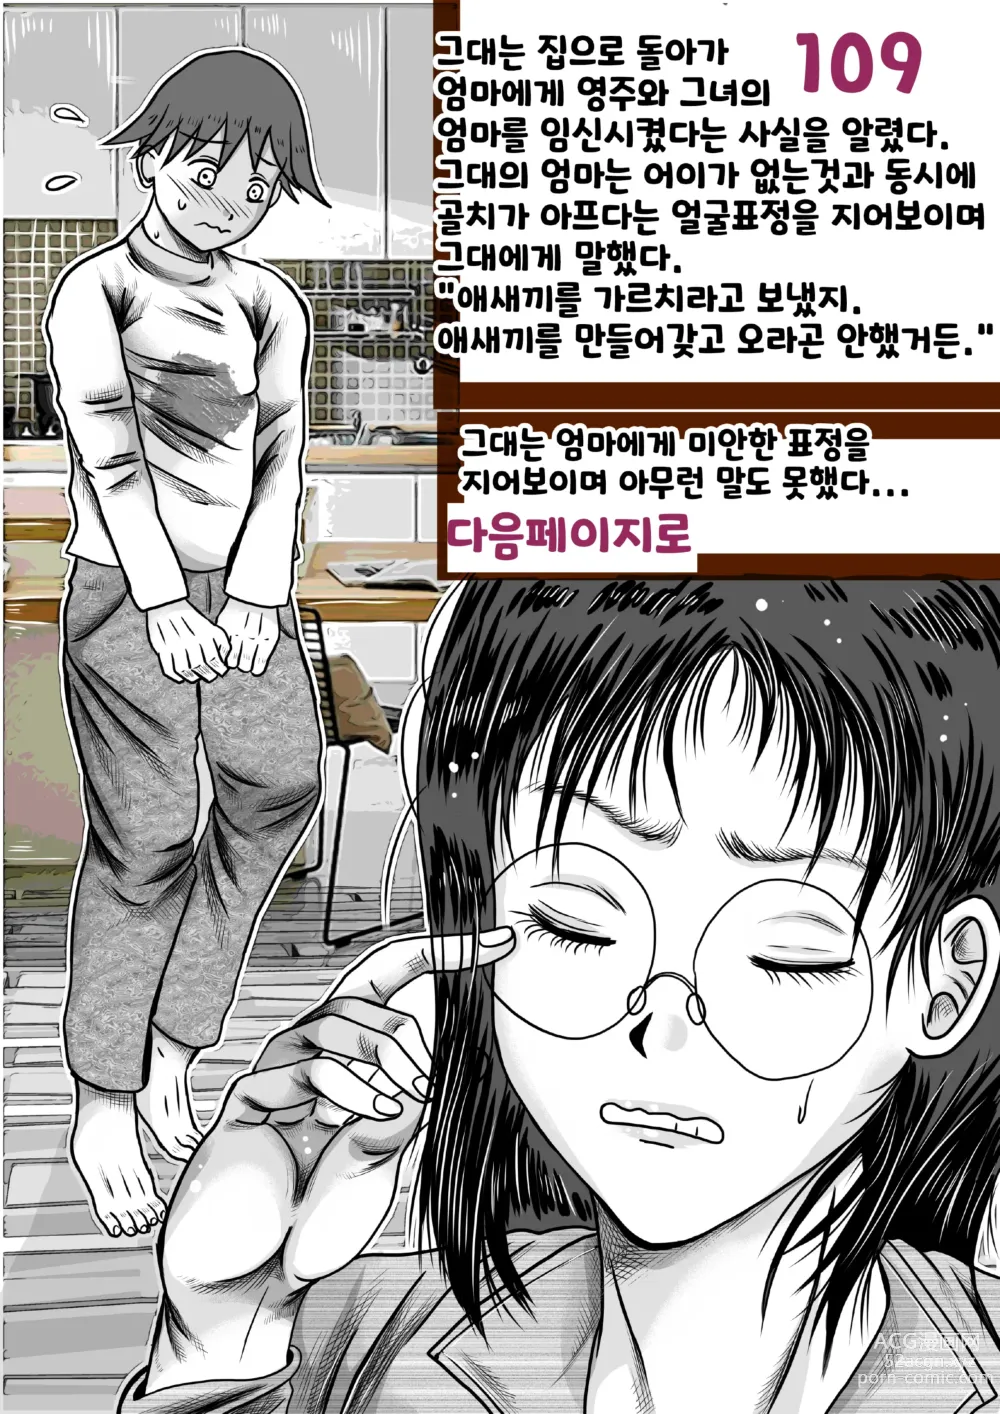 Page 109 of doujinshi 나를괴롭히는여자들